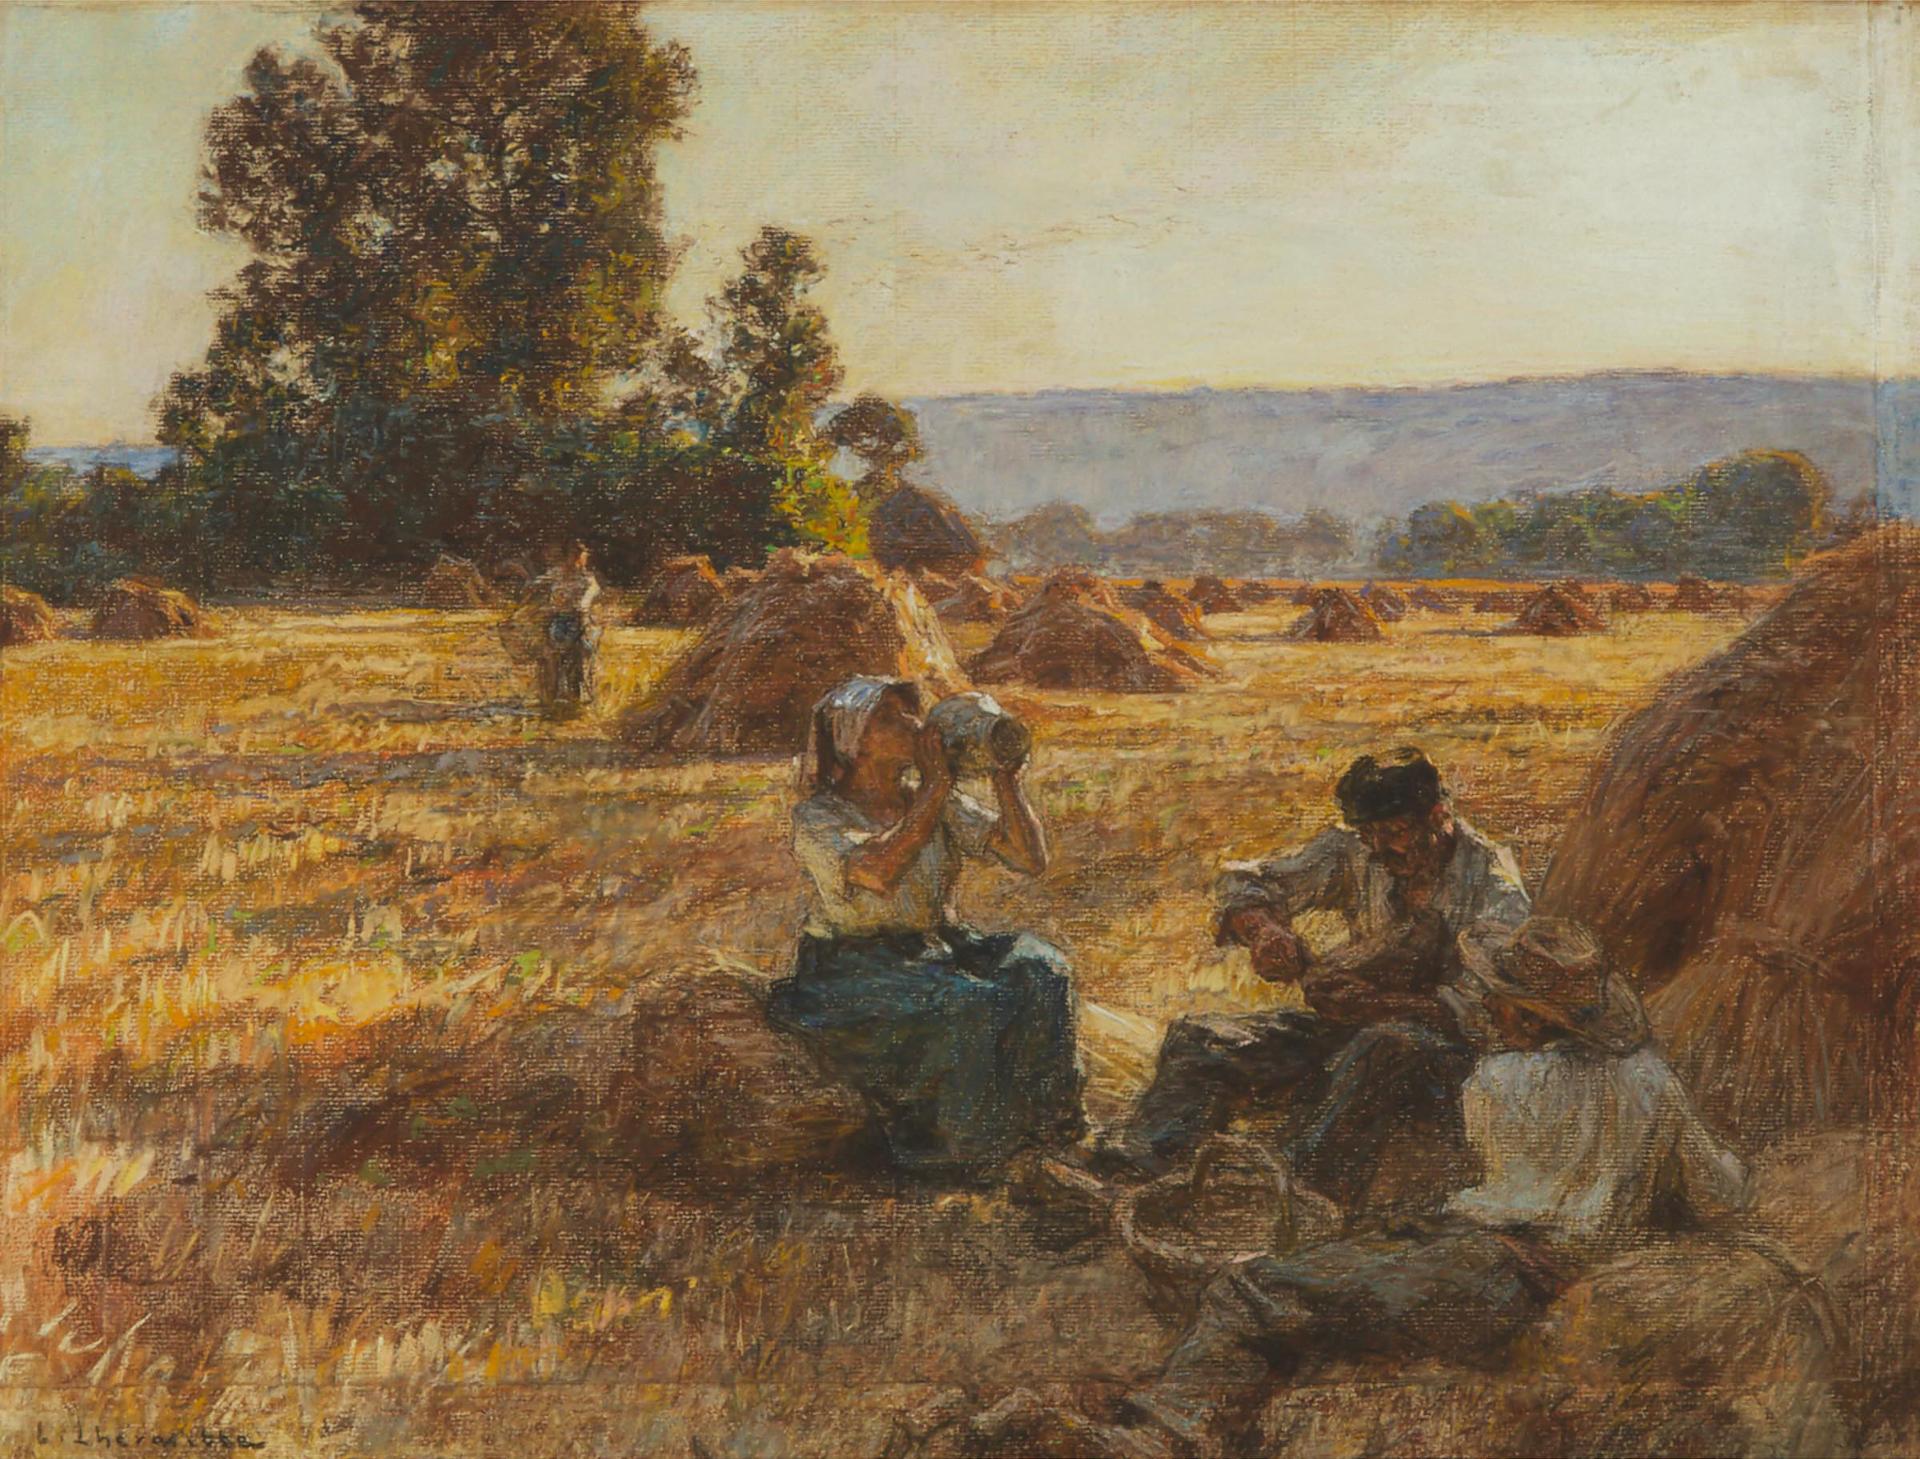 Léon Augustin L'Hermitte (1844-1925) - Harvesters At Rest